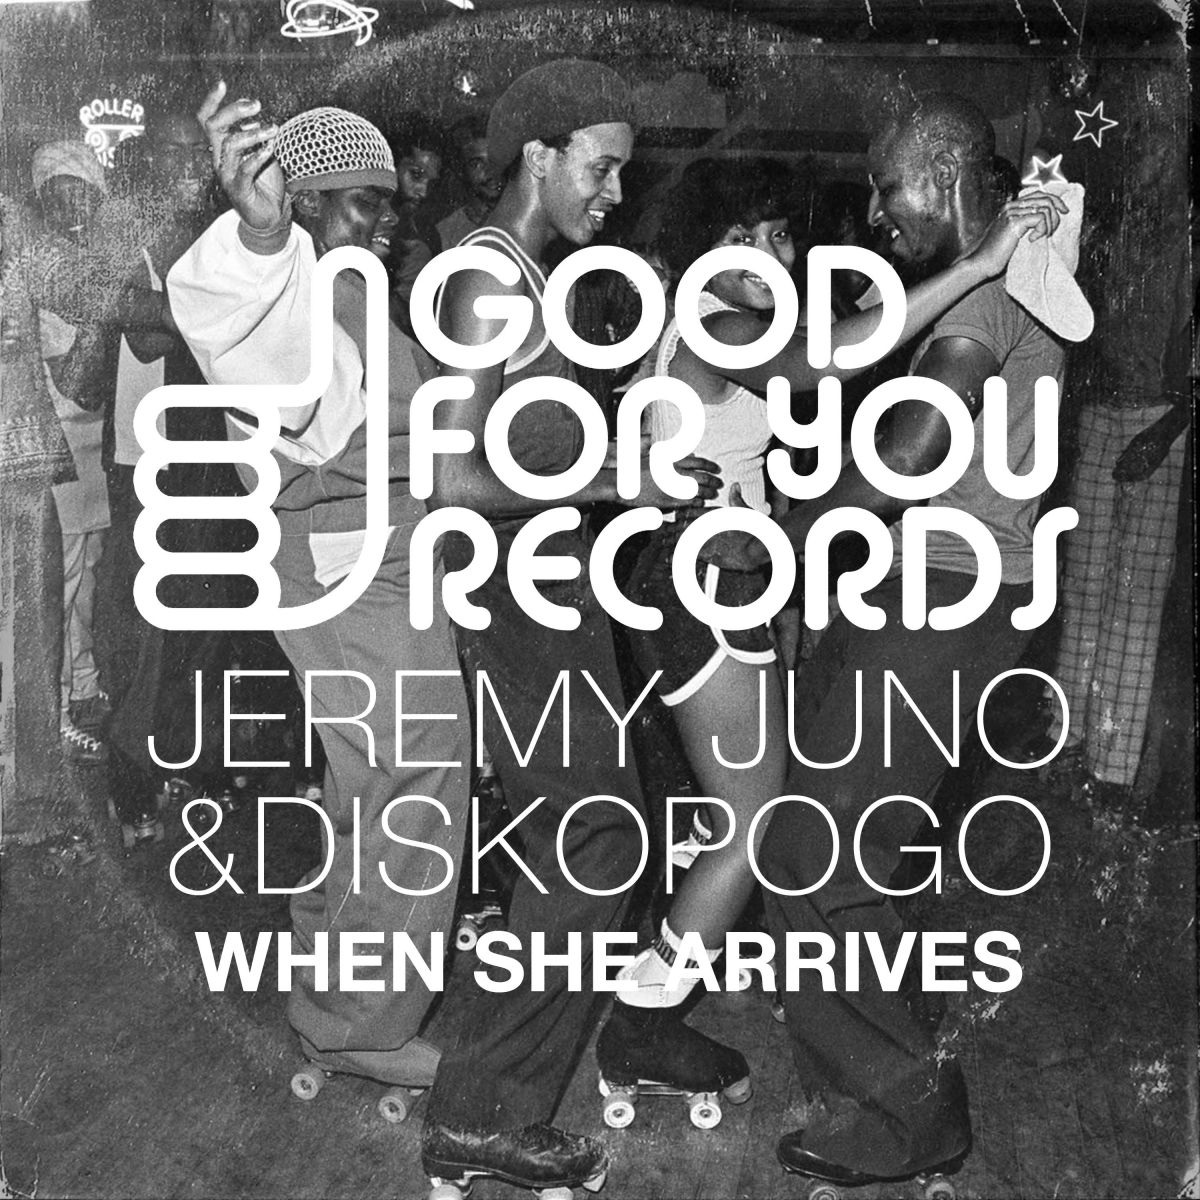 Jeremy Juno, Diskopogo - When She Arrives / Good For You Records